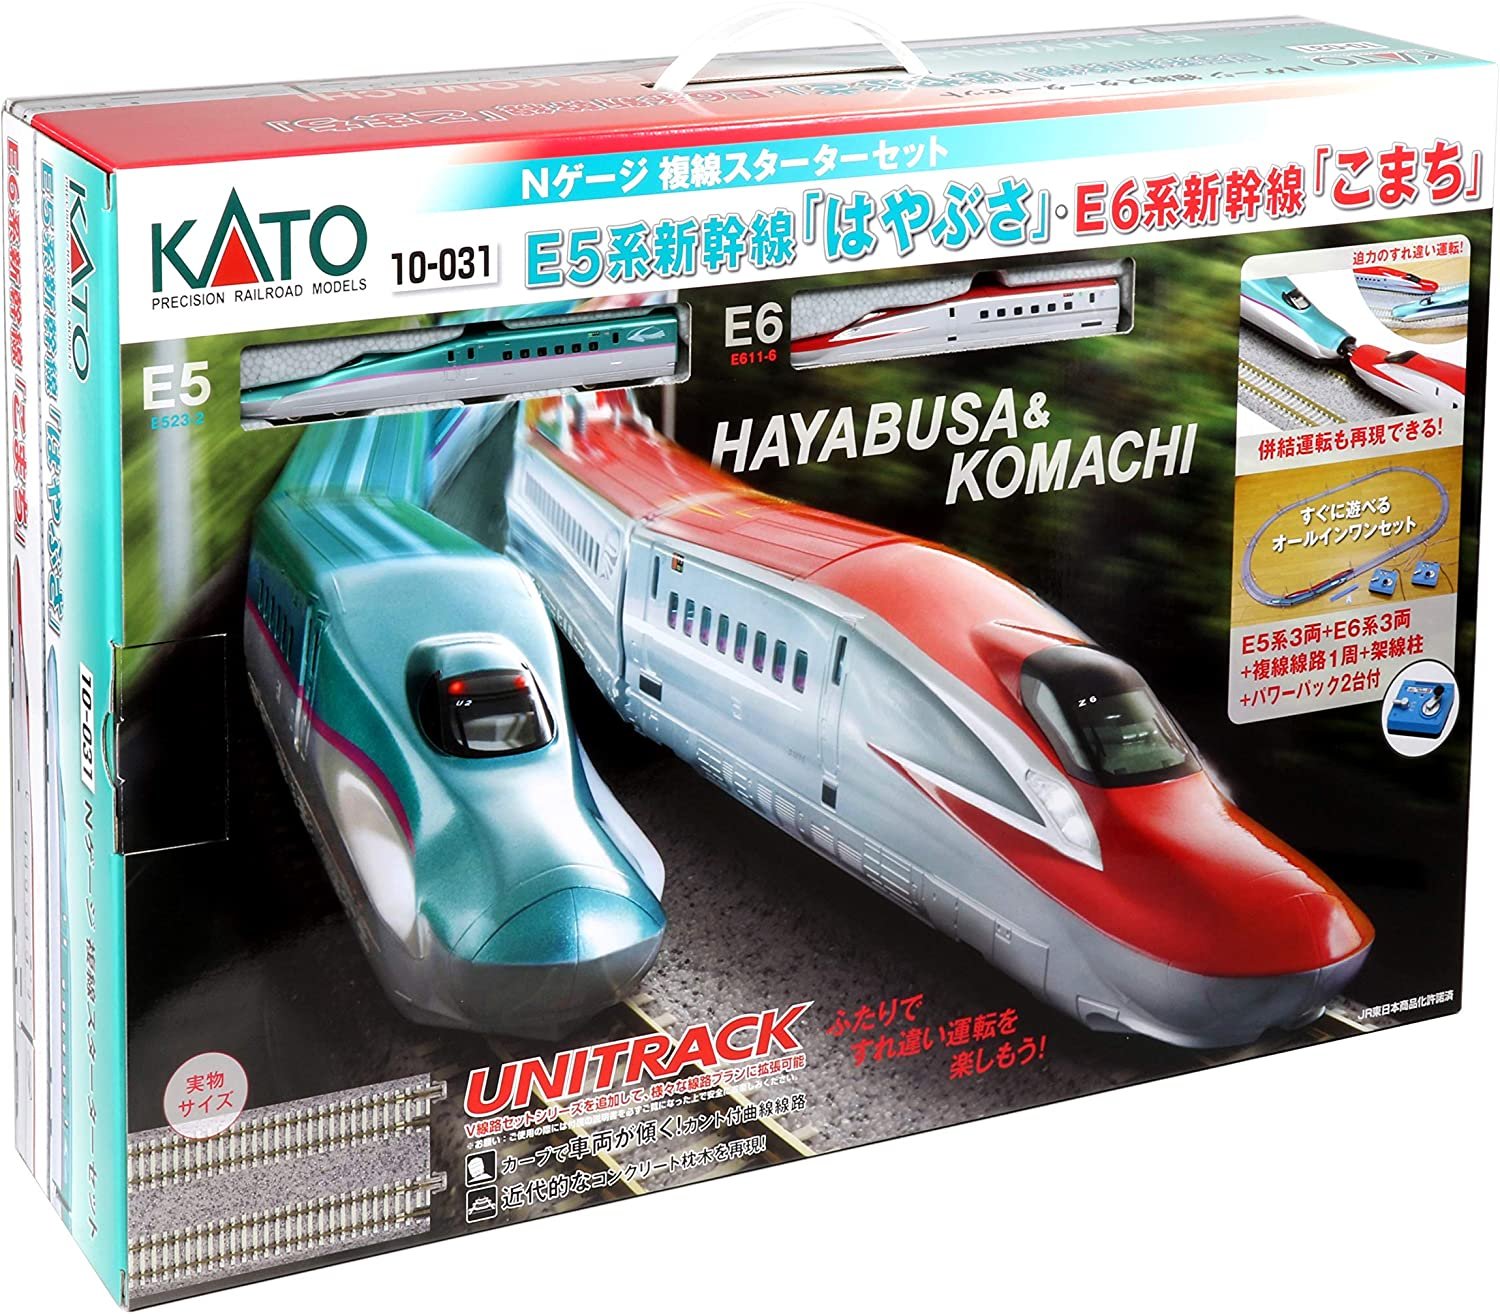 KATO 10-031 E5系新幹線「はやぶさ」・E6系新幹線「こまち」 複線